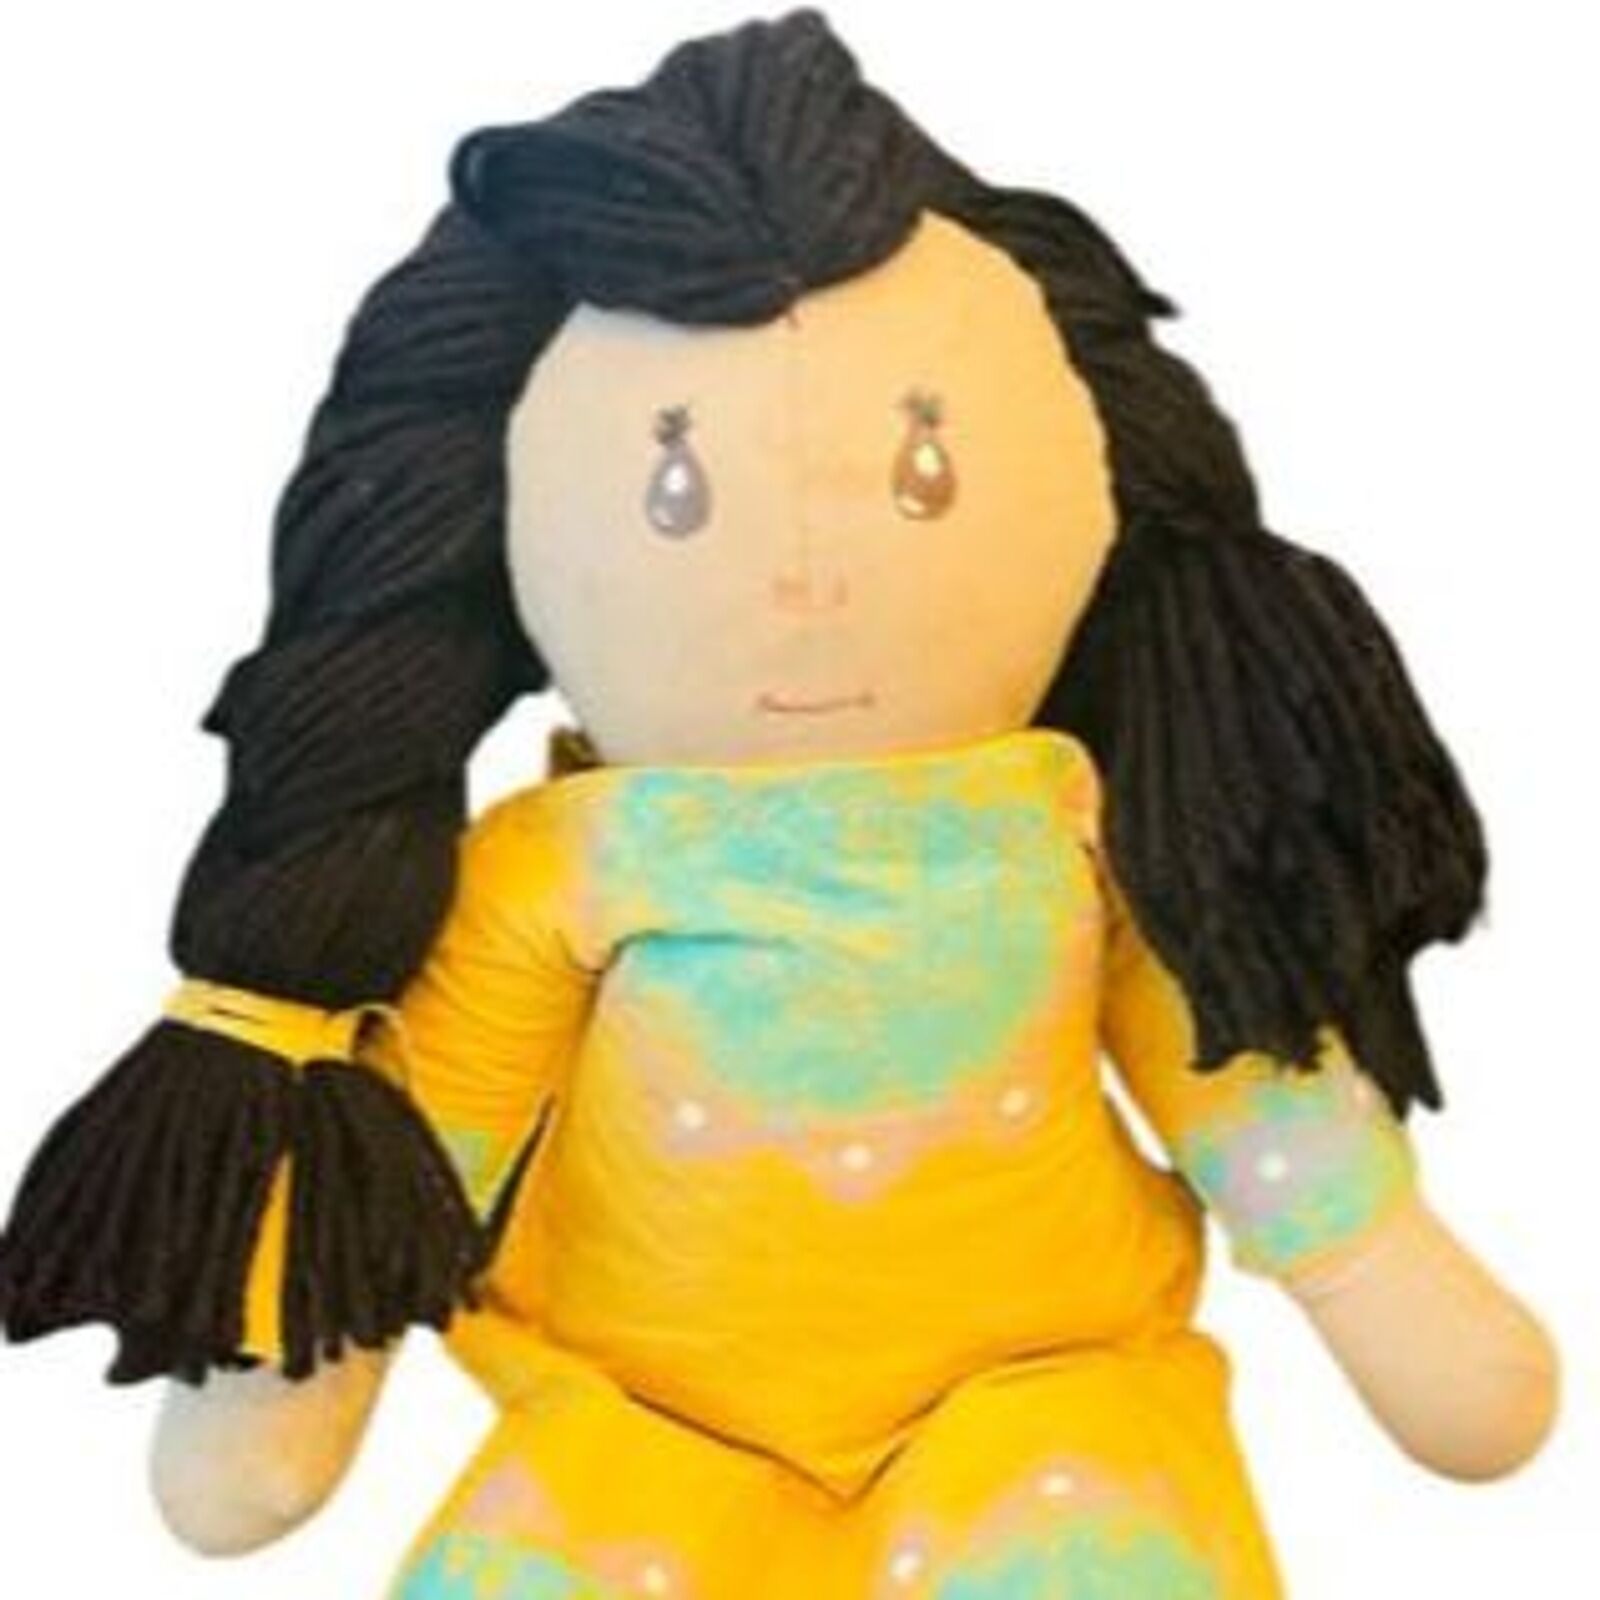 Handmade Native American Doll Paper Mache 19” Vintage Girl Toy